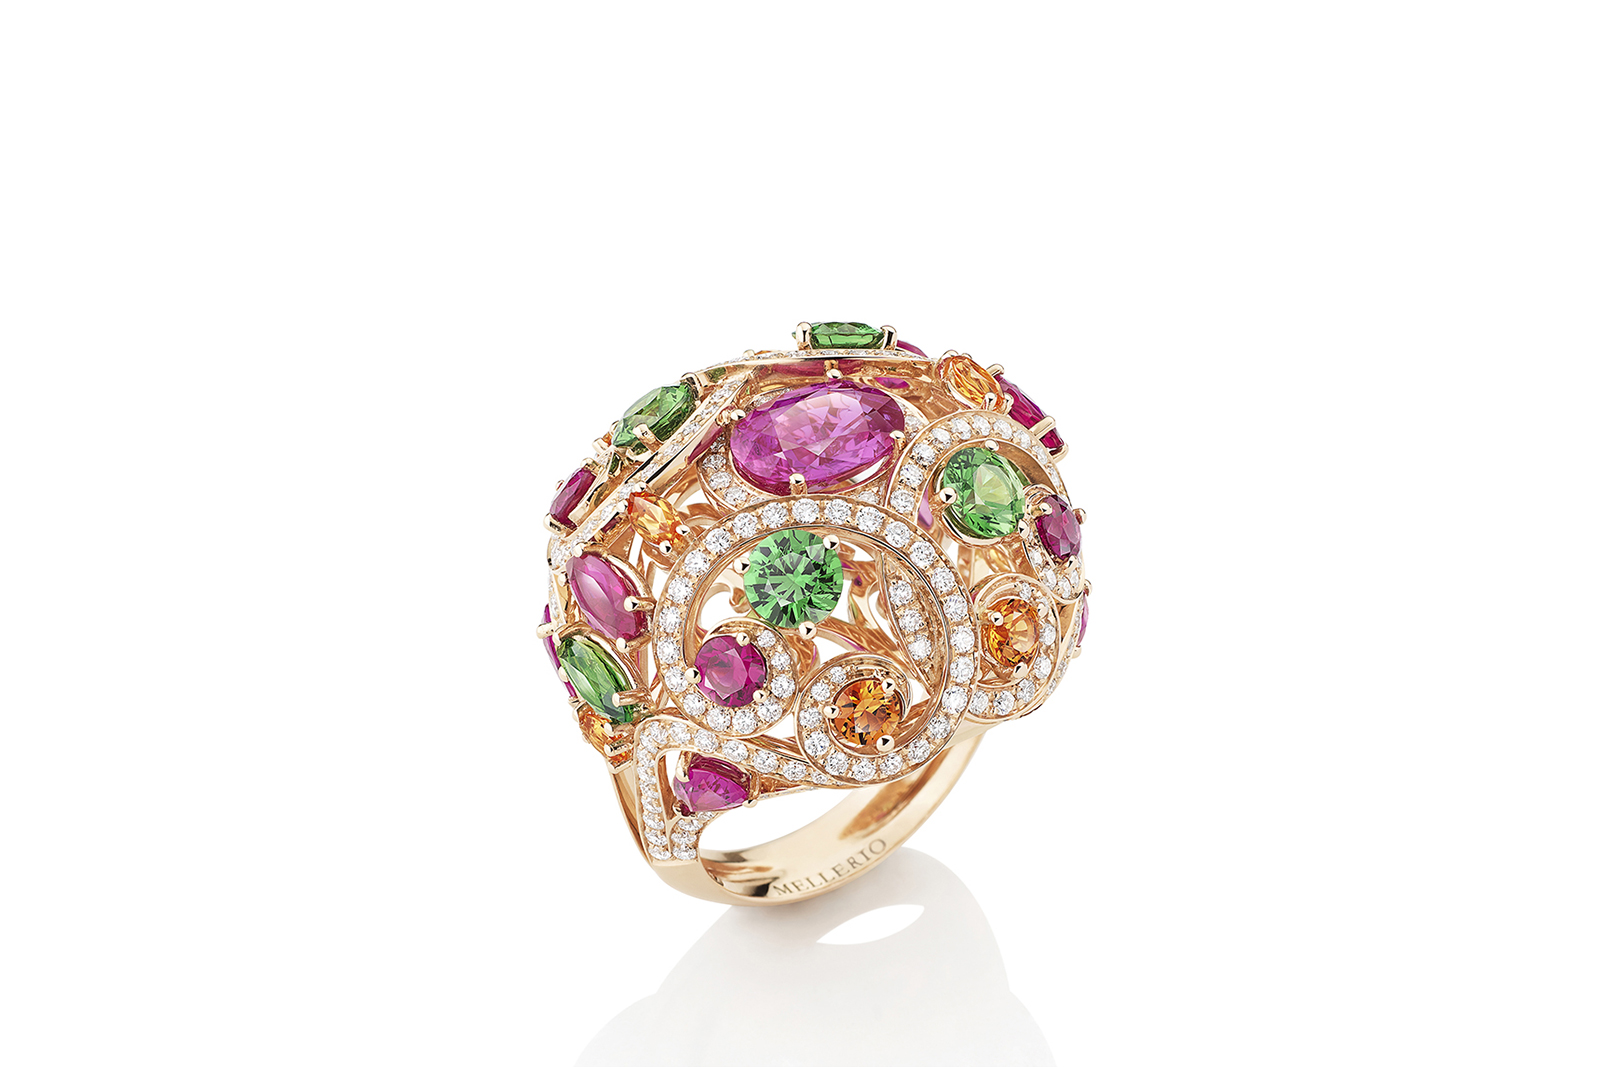 Mellerio dits Meller ‘Millerfiora’ ring from the 'Isola Bella' collection in pink sapphires, spessarite garnets, green tsavorites and diamonds